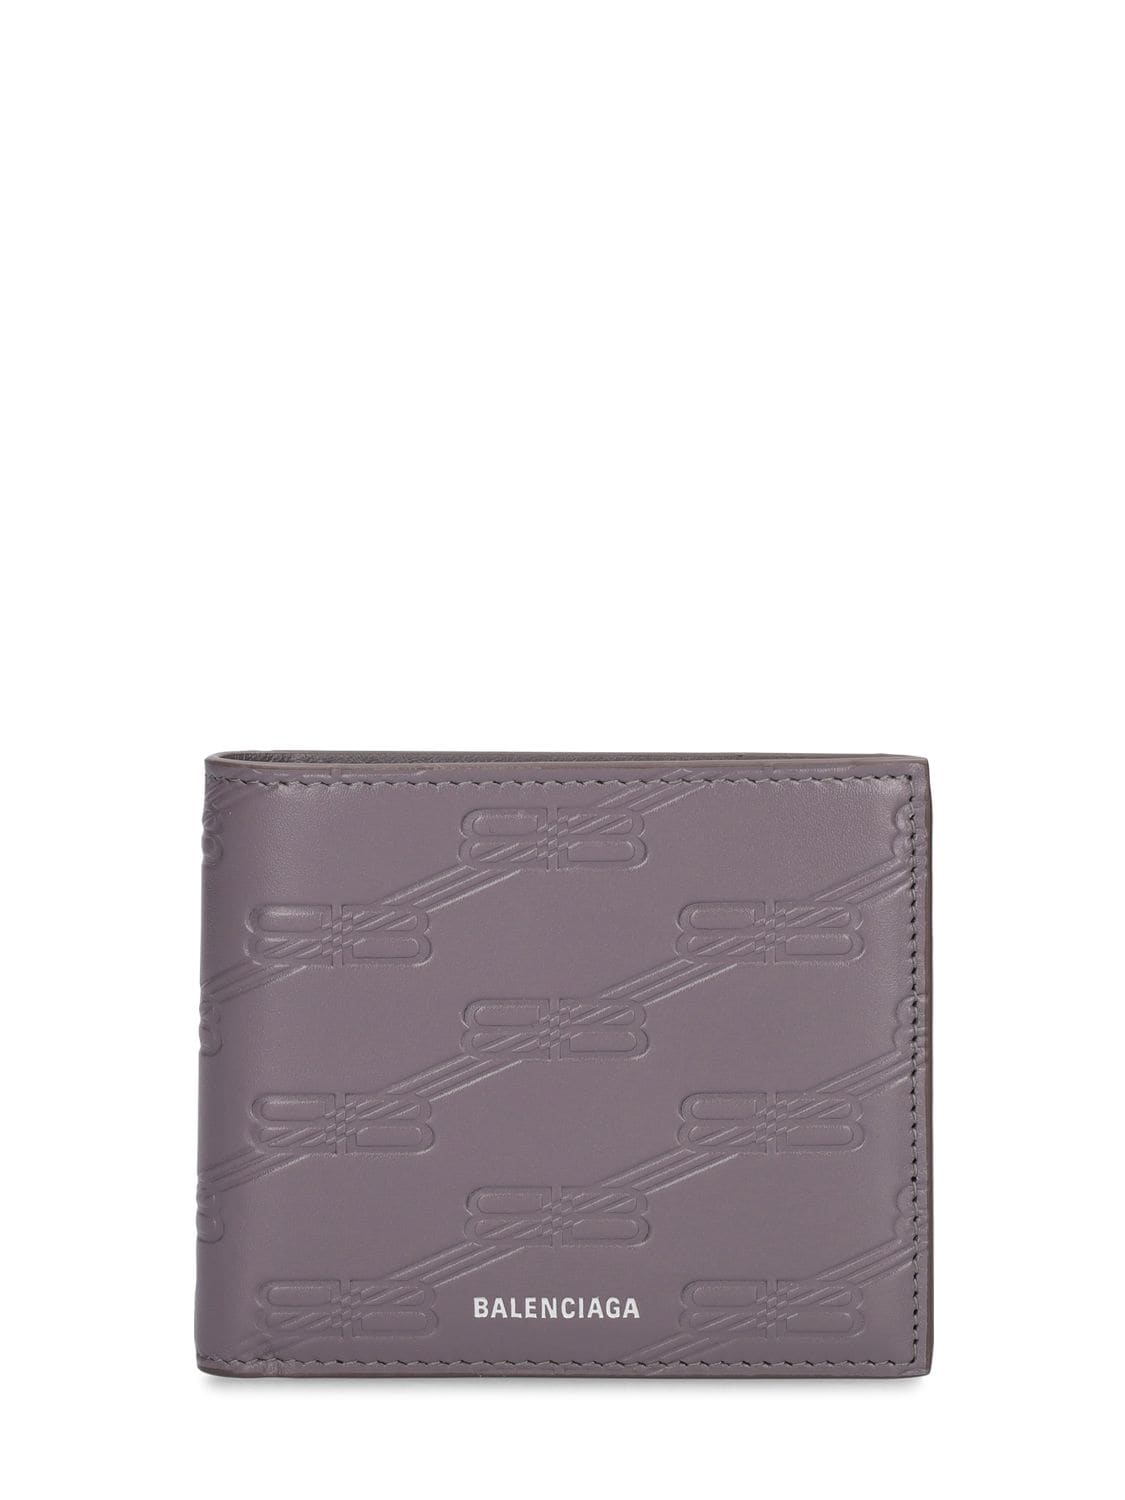 Balenciaga Bb Monogram Leather Billfold Wallet In Dark Grey